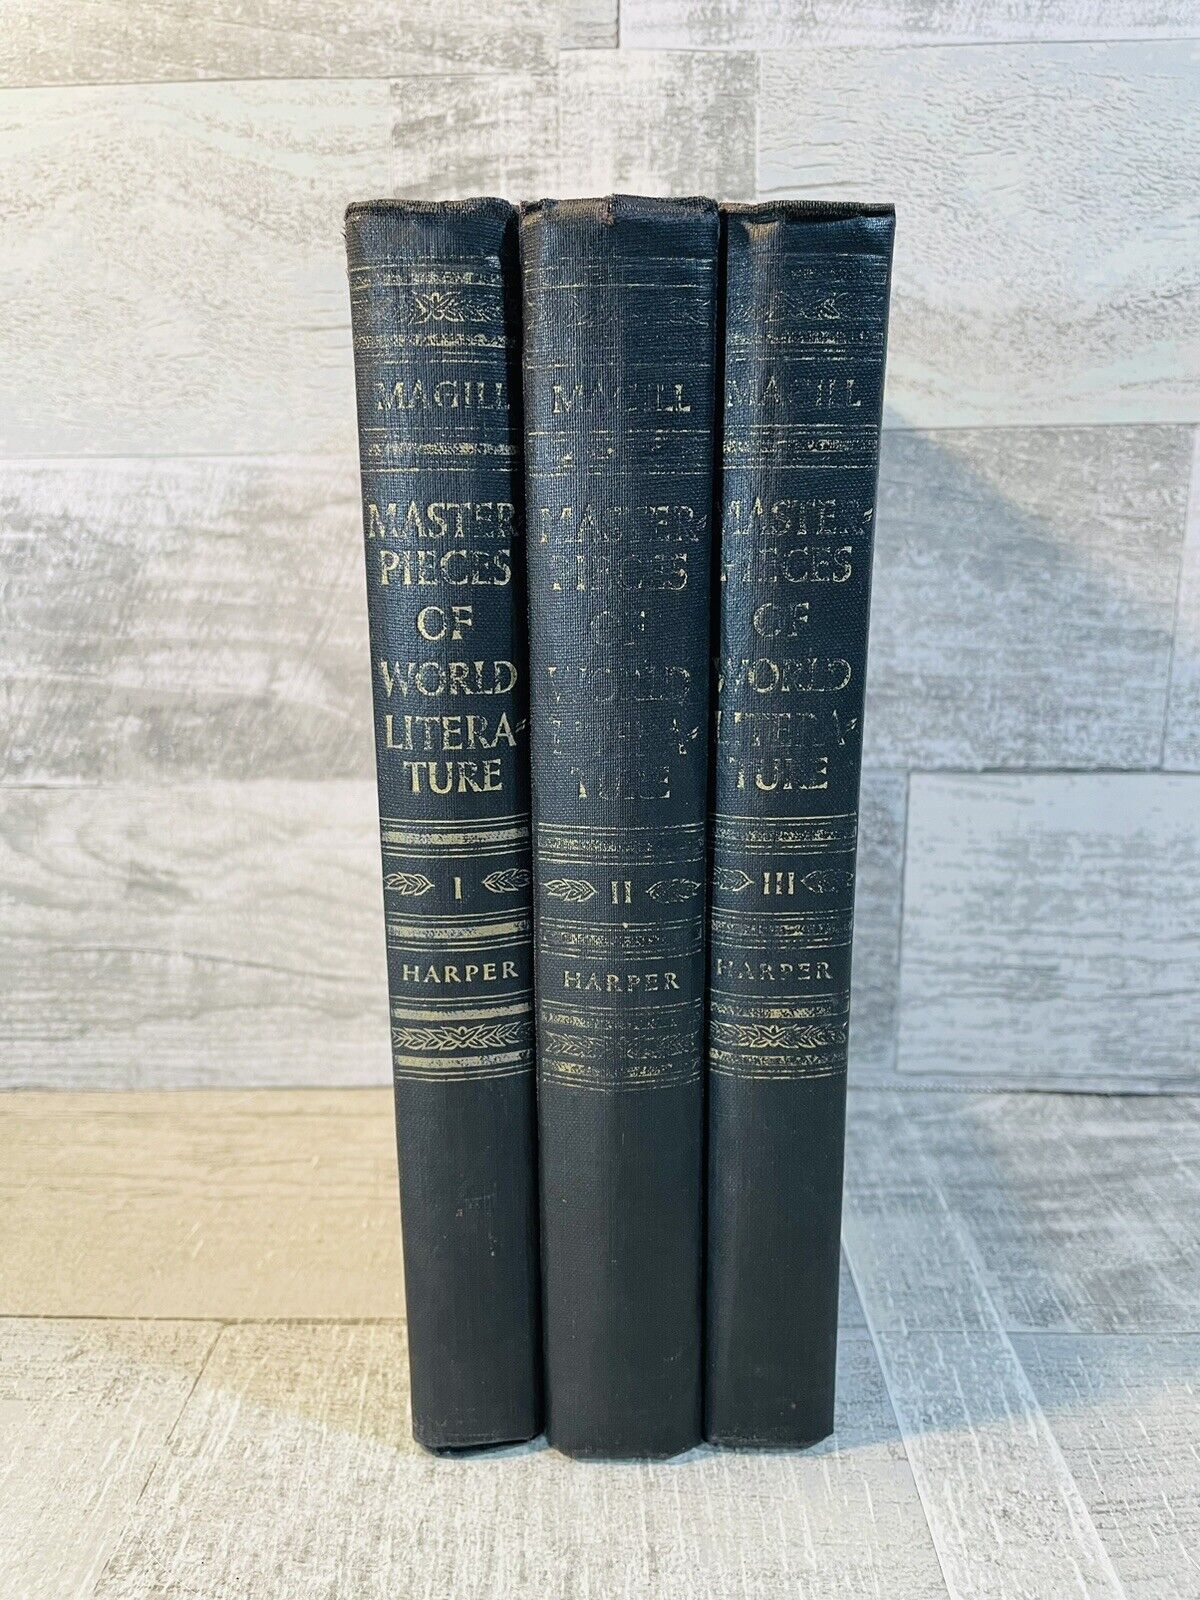 Masterpieces Of World Literature Volumes 1-3 Vintage 1952 Hardcover Books